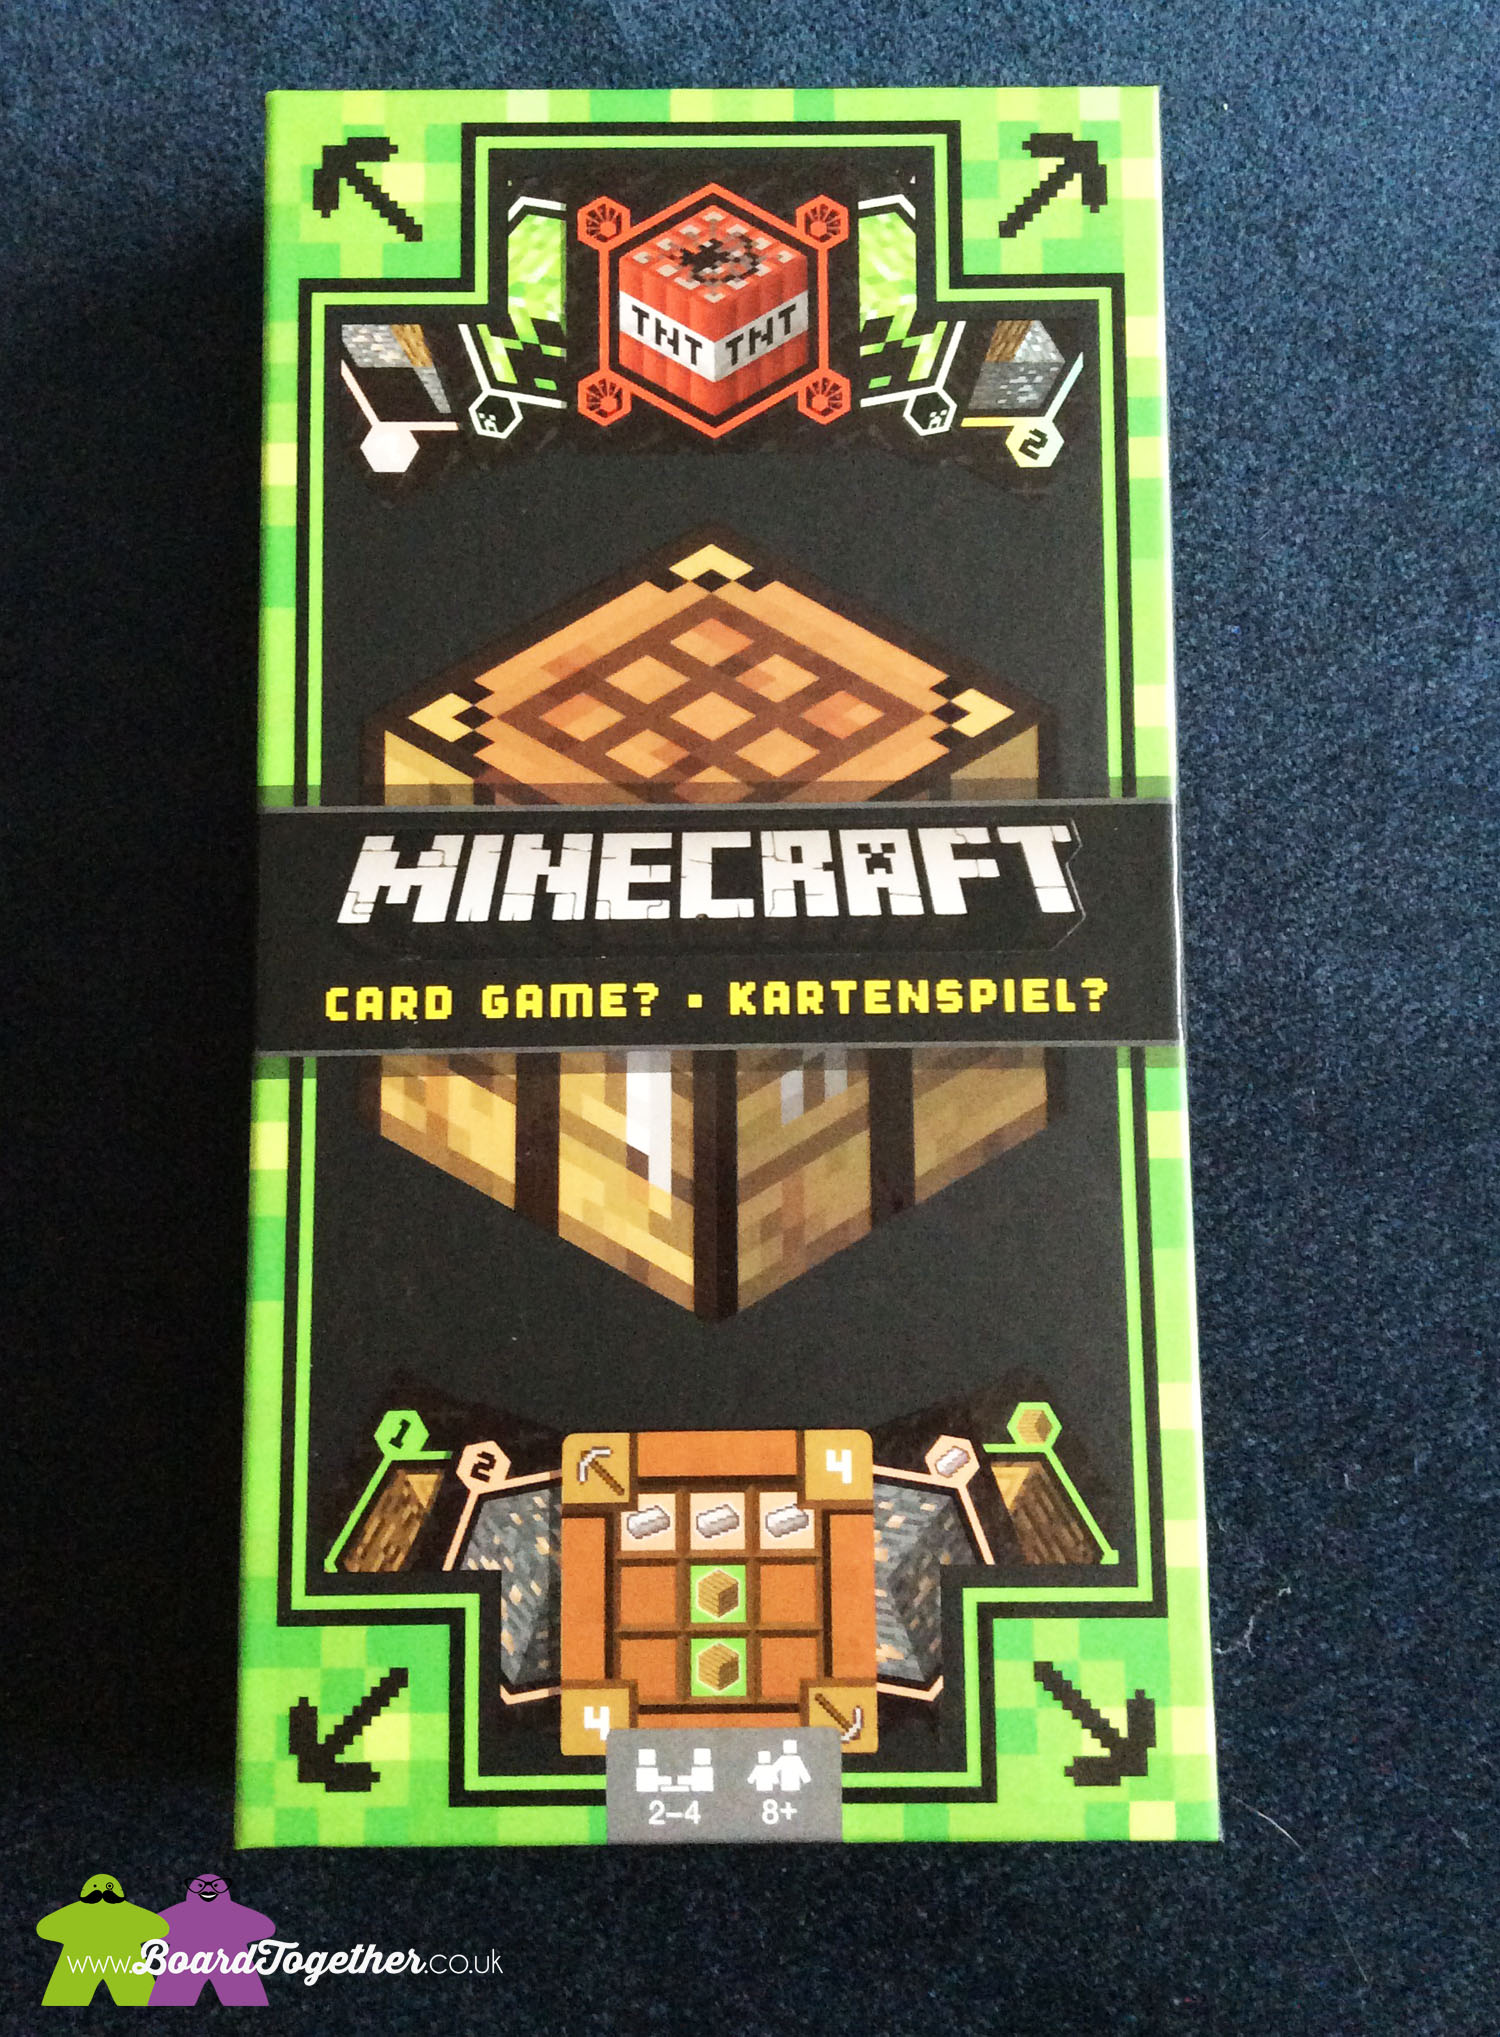 Minecraft The Cardgame?